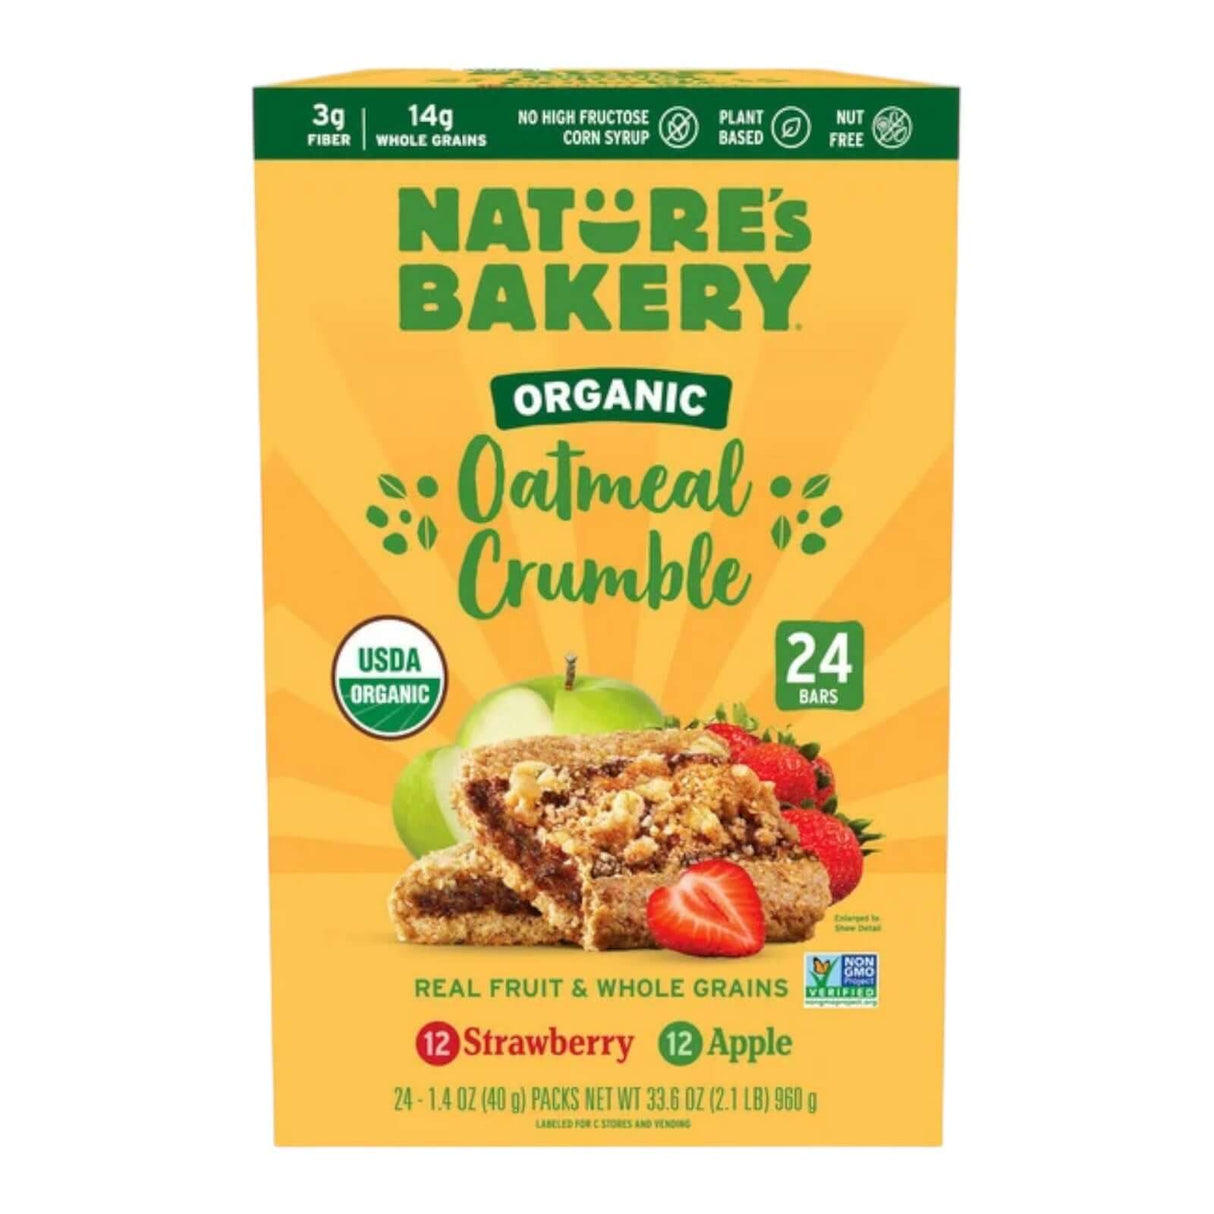 Nature's Bakery Organic Oatmeal Crumble Strawberry & Apple Bars